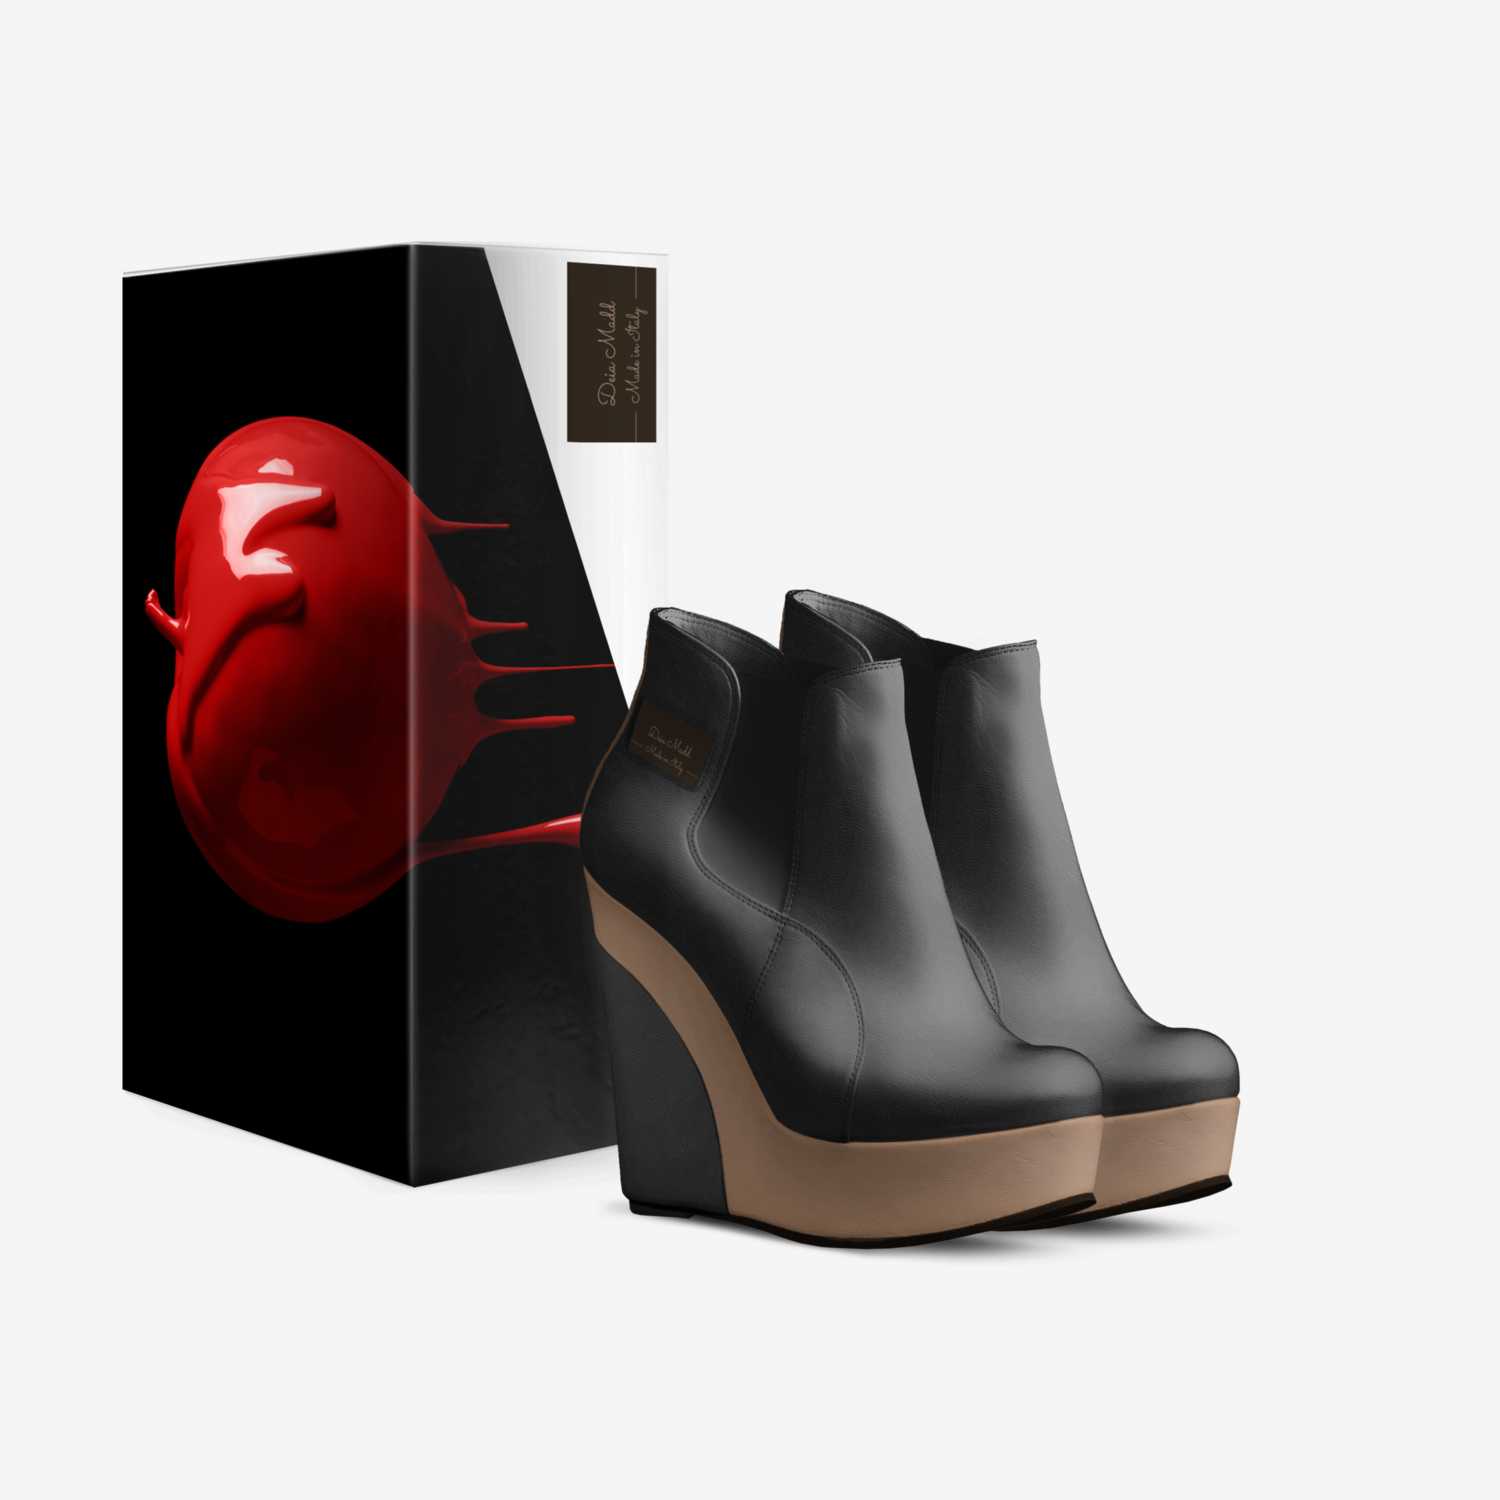 Deia Madd custom made in Italy shoes by Princessdeia | Box view